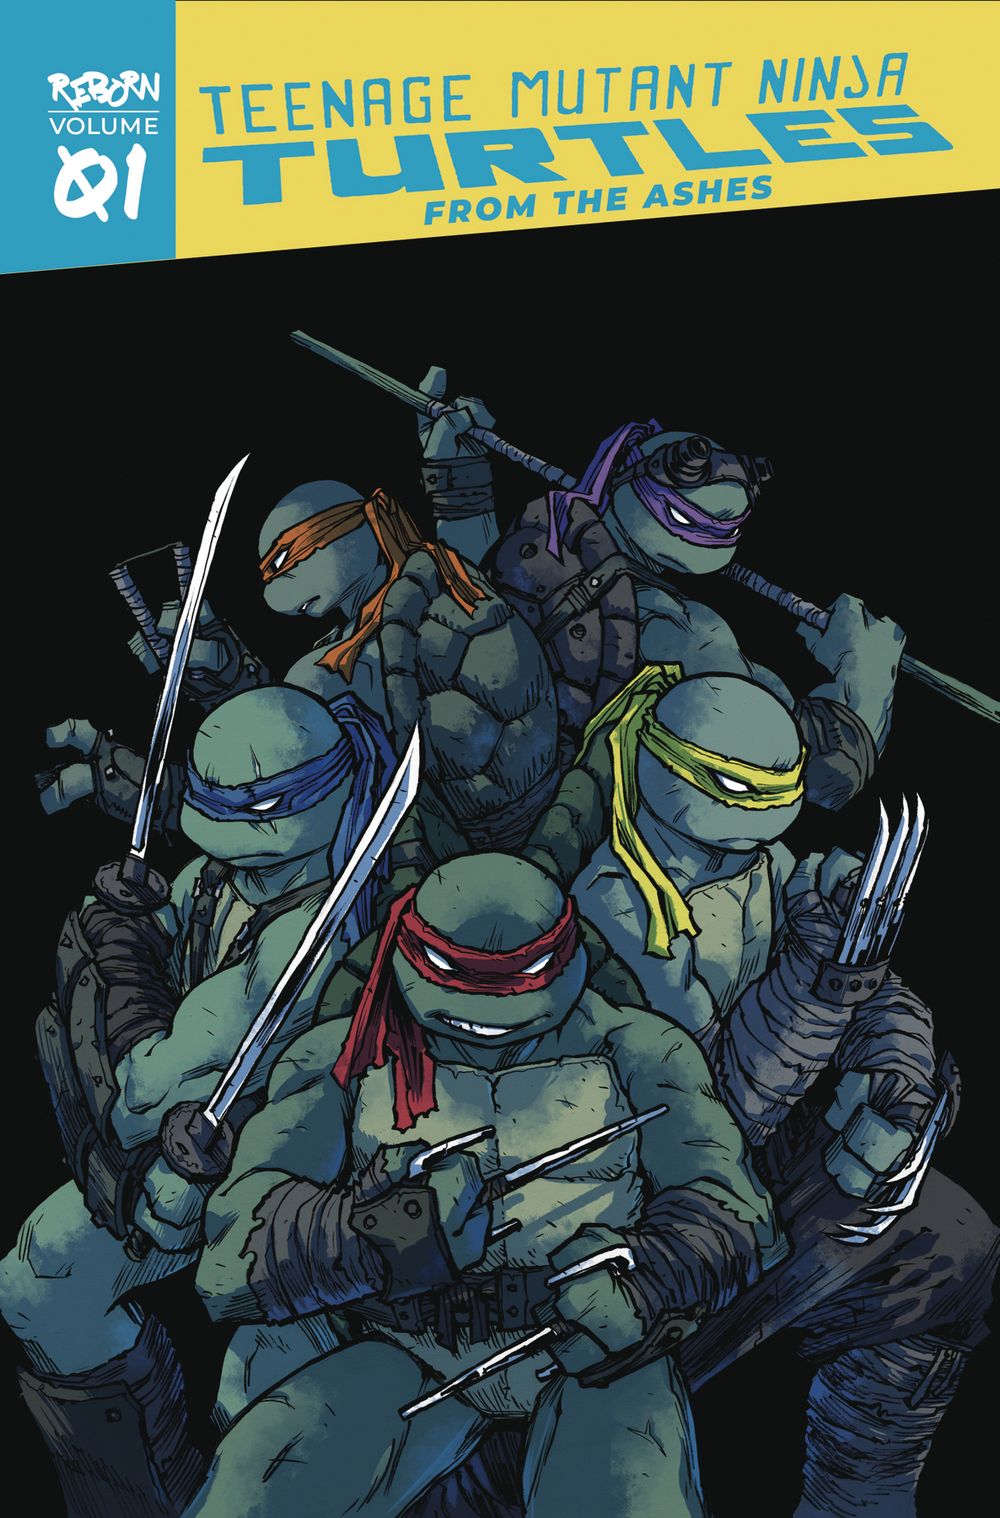 Teenage Mutant Ninja Turtles Reborn TP VOL 01 From the Ashes